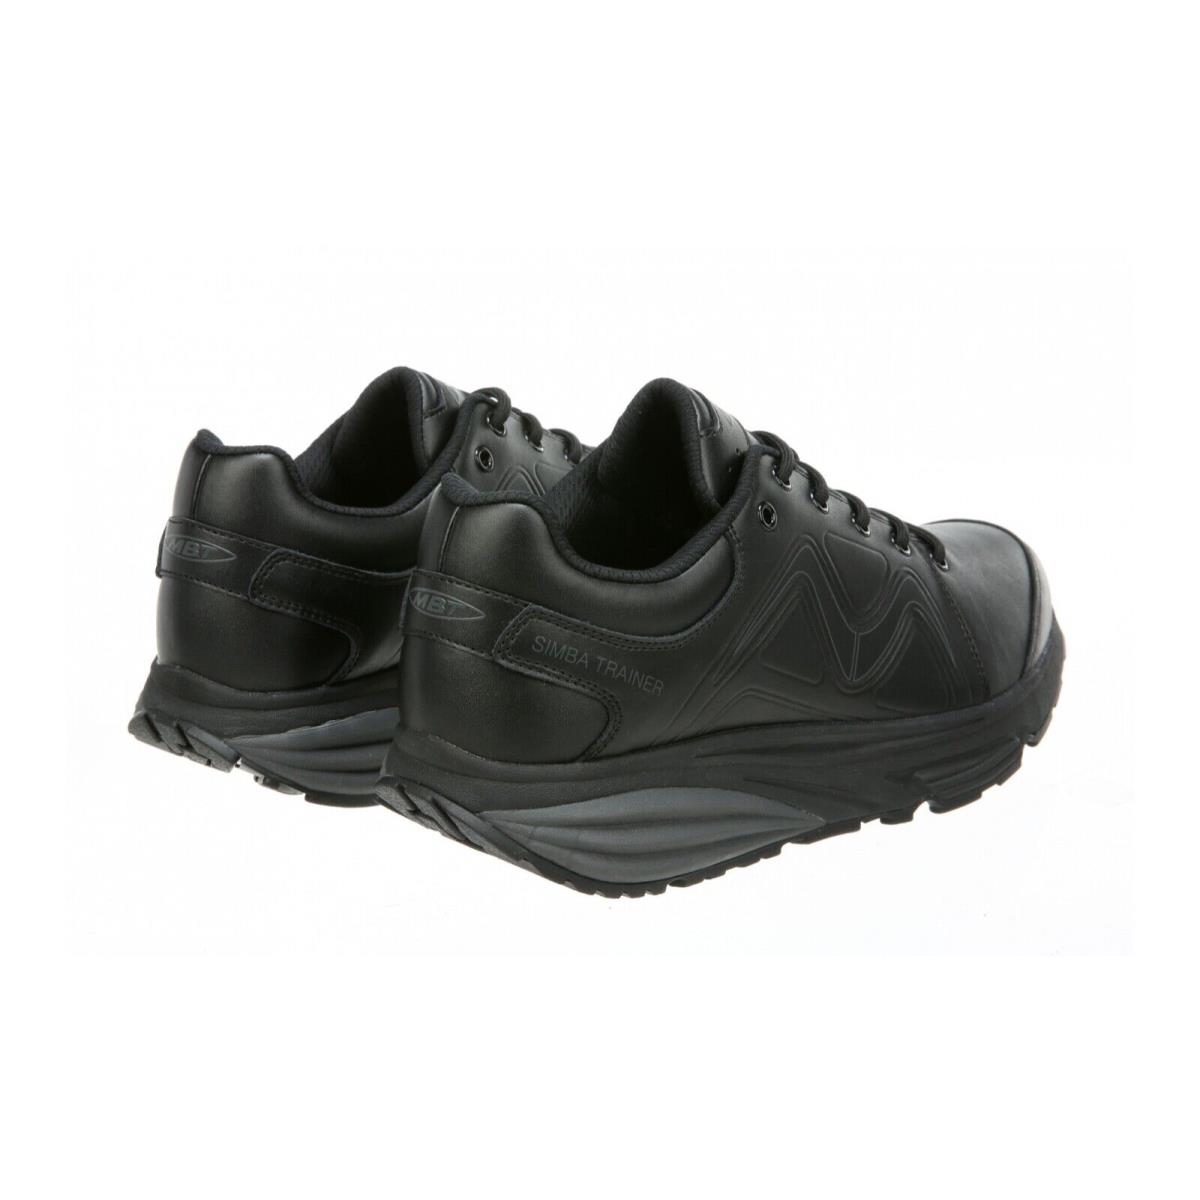 MBT shoes SIMBA TRAINER - Black 1